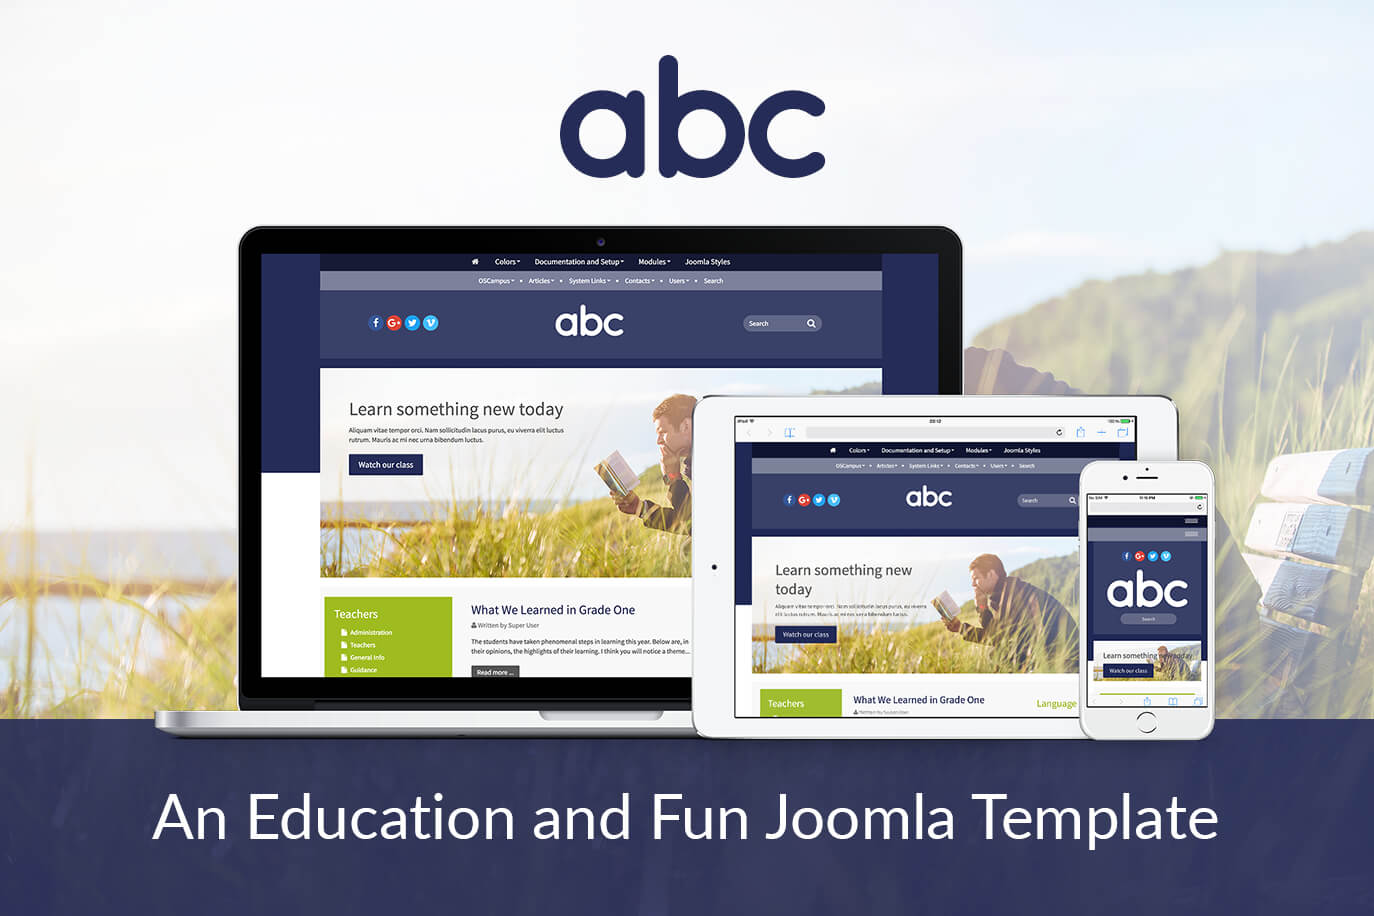 An education and fun Joomla template - ABC